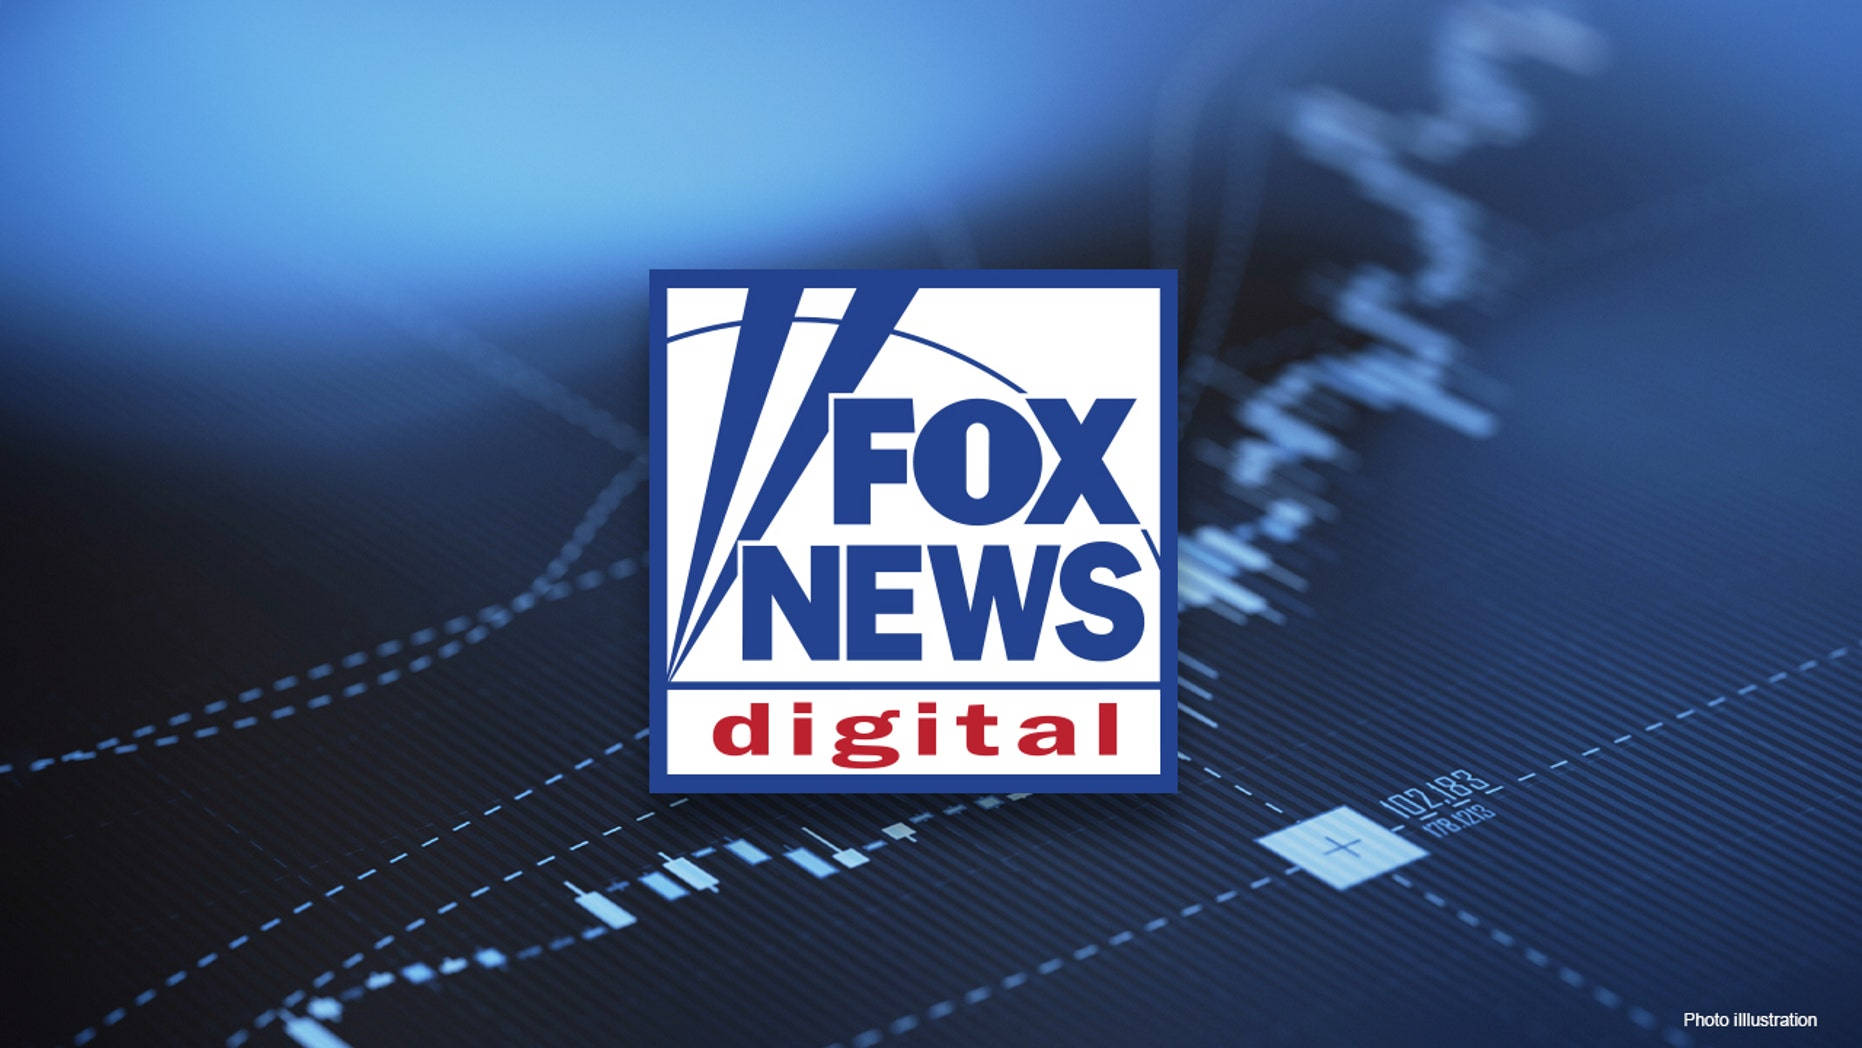 Fox News Digital Background